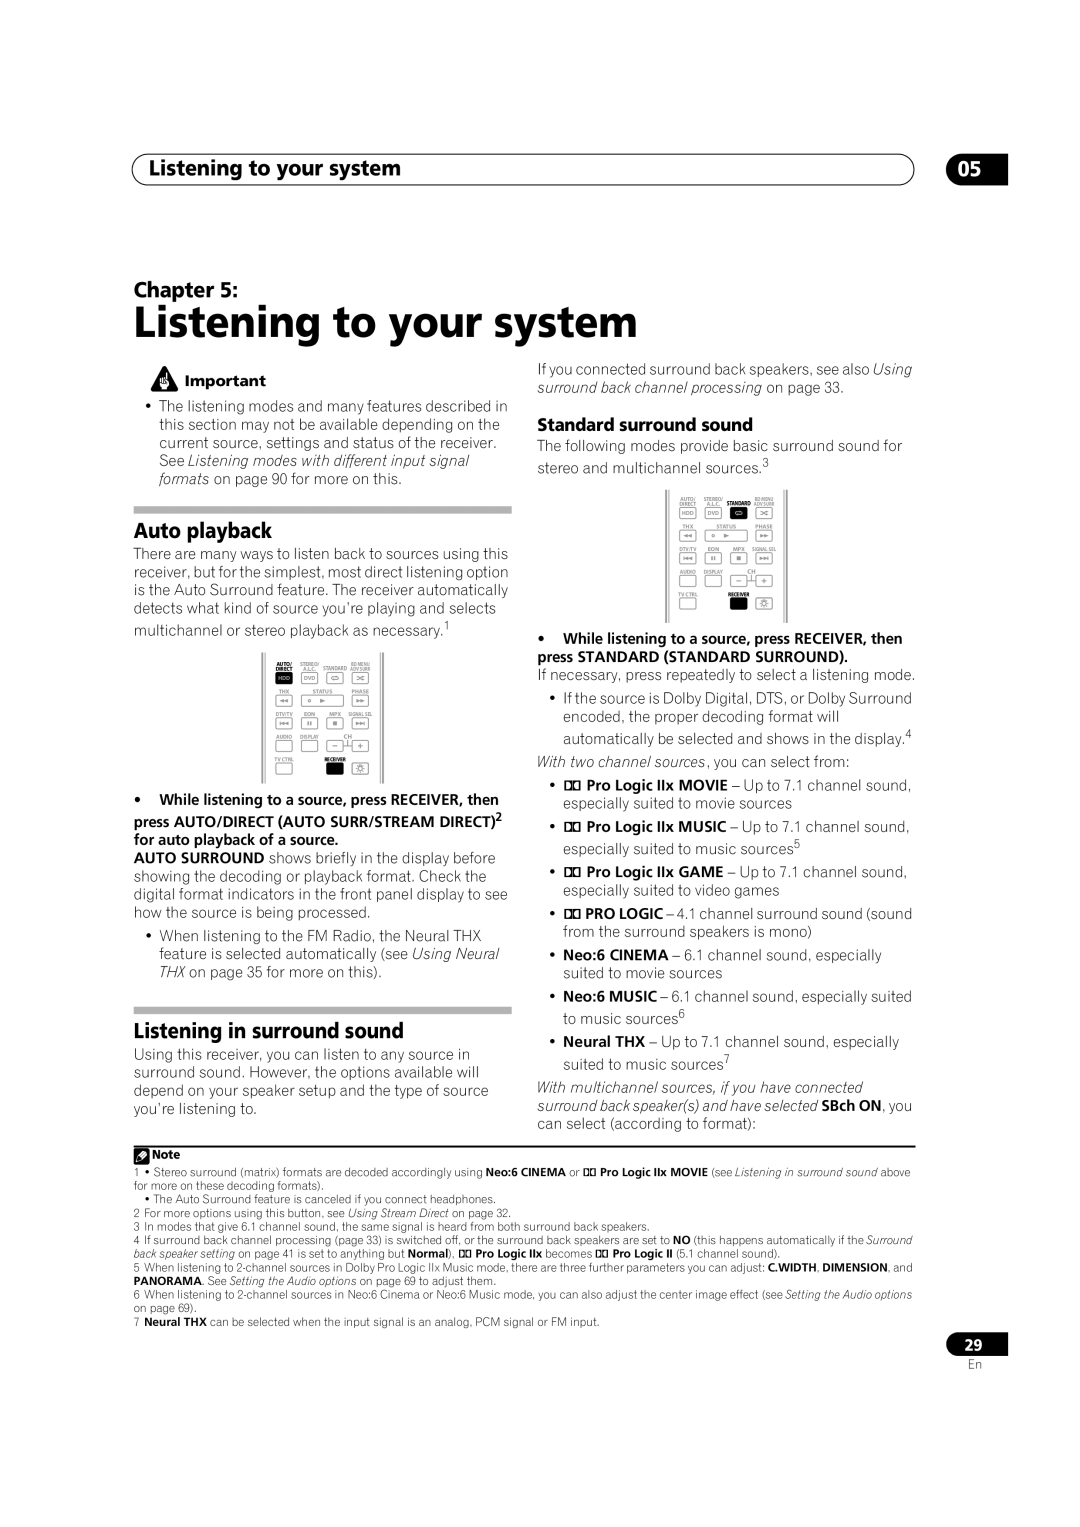 Pioneer VSX-LX51 Listening to your system, Chapter, Auto playback, Listening in surround sound, Standard surround sound 